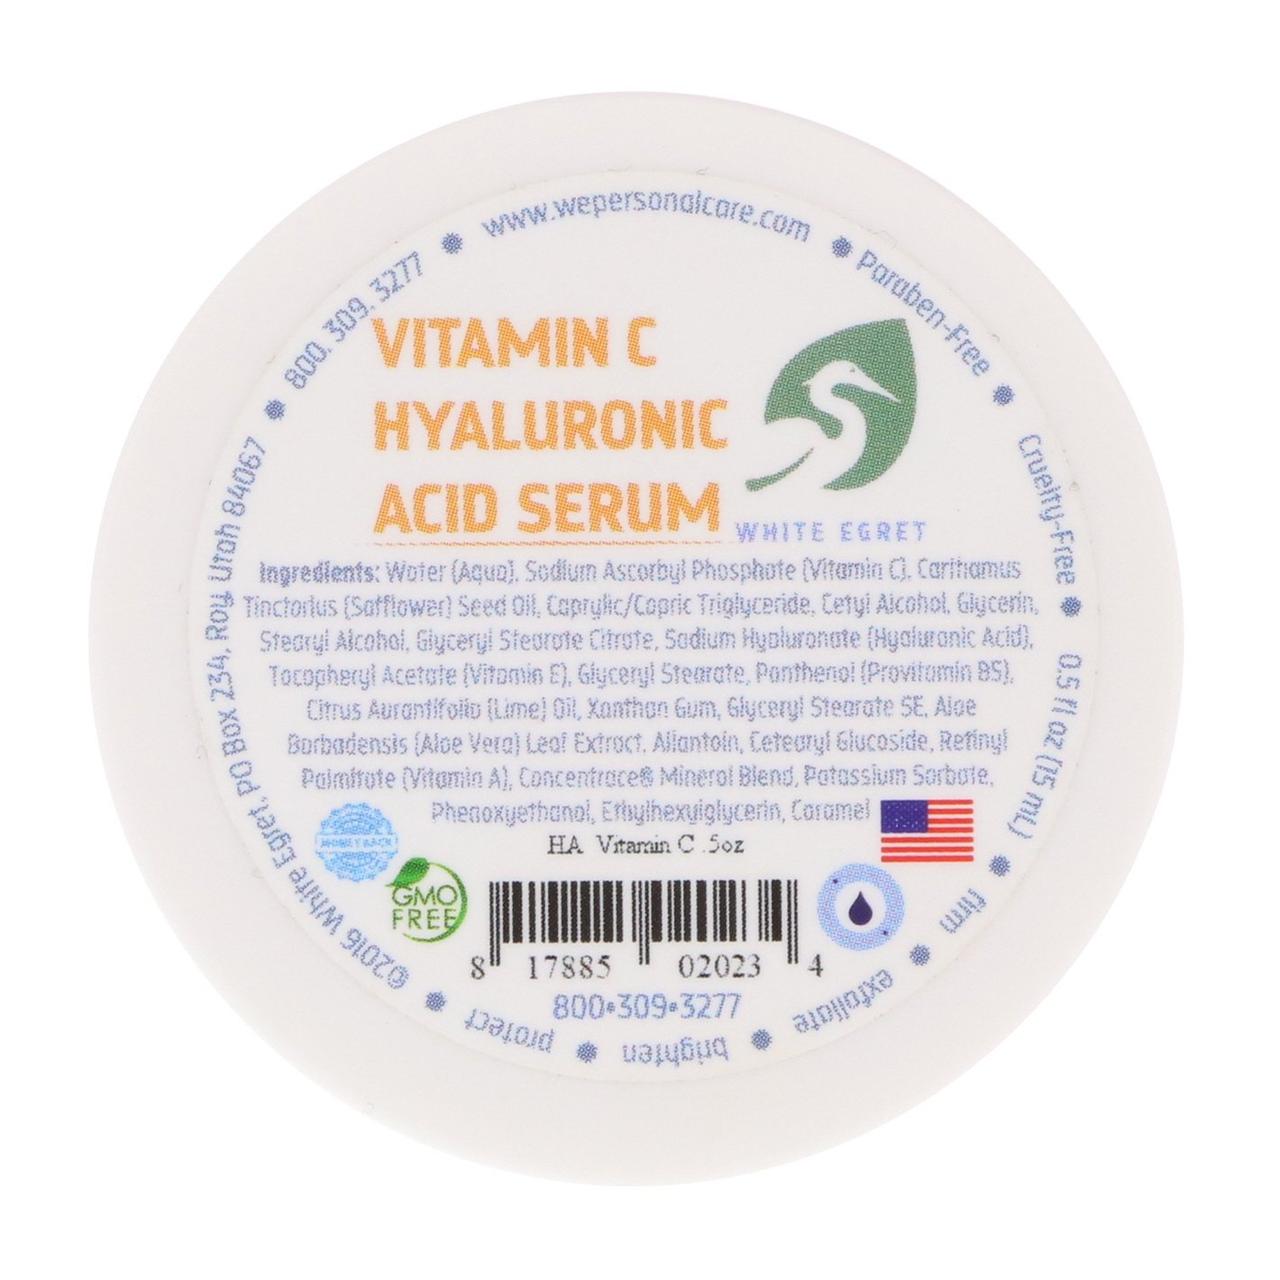 White Egret Personal Care, Vitamin C Hyaluronic Acid Serum, .5 oz